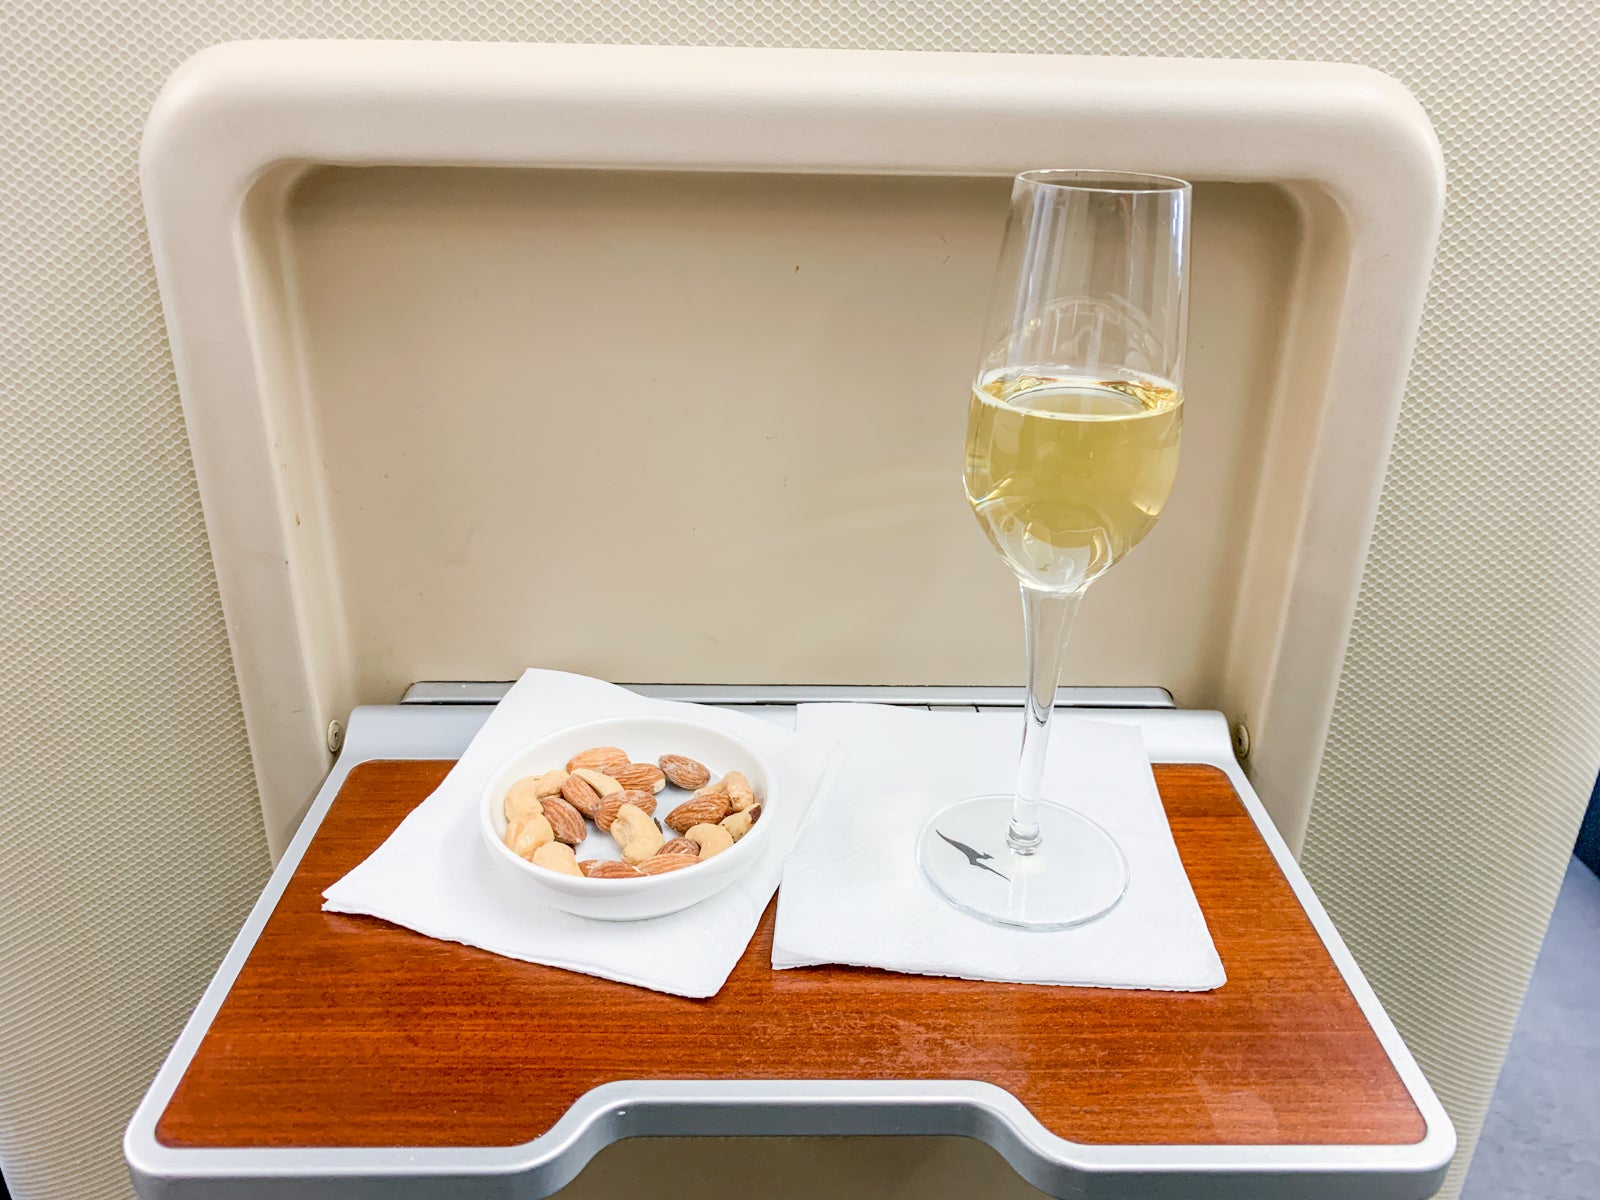 qantas first class meal